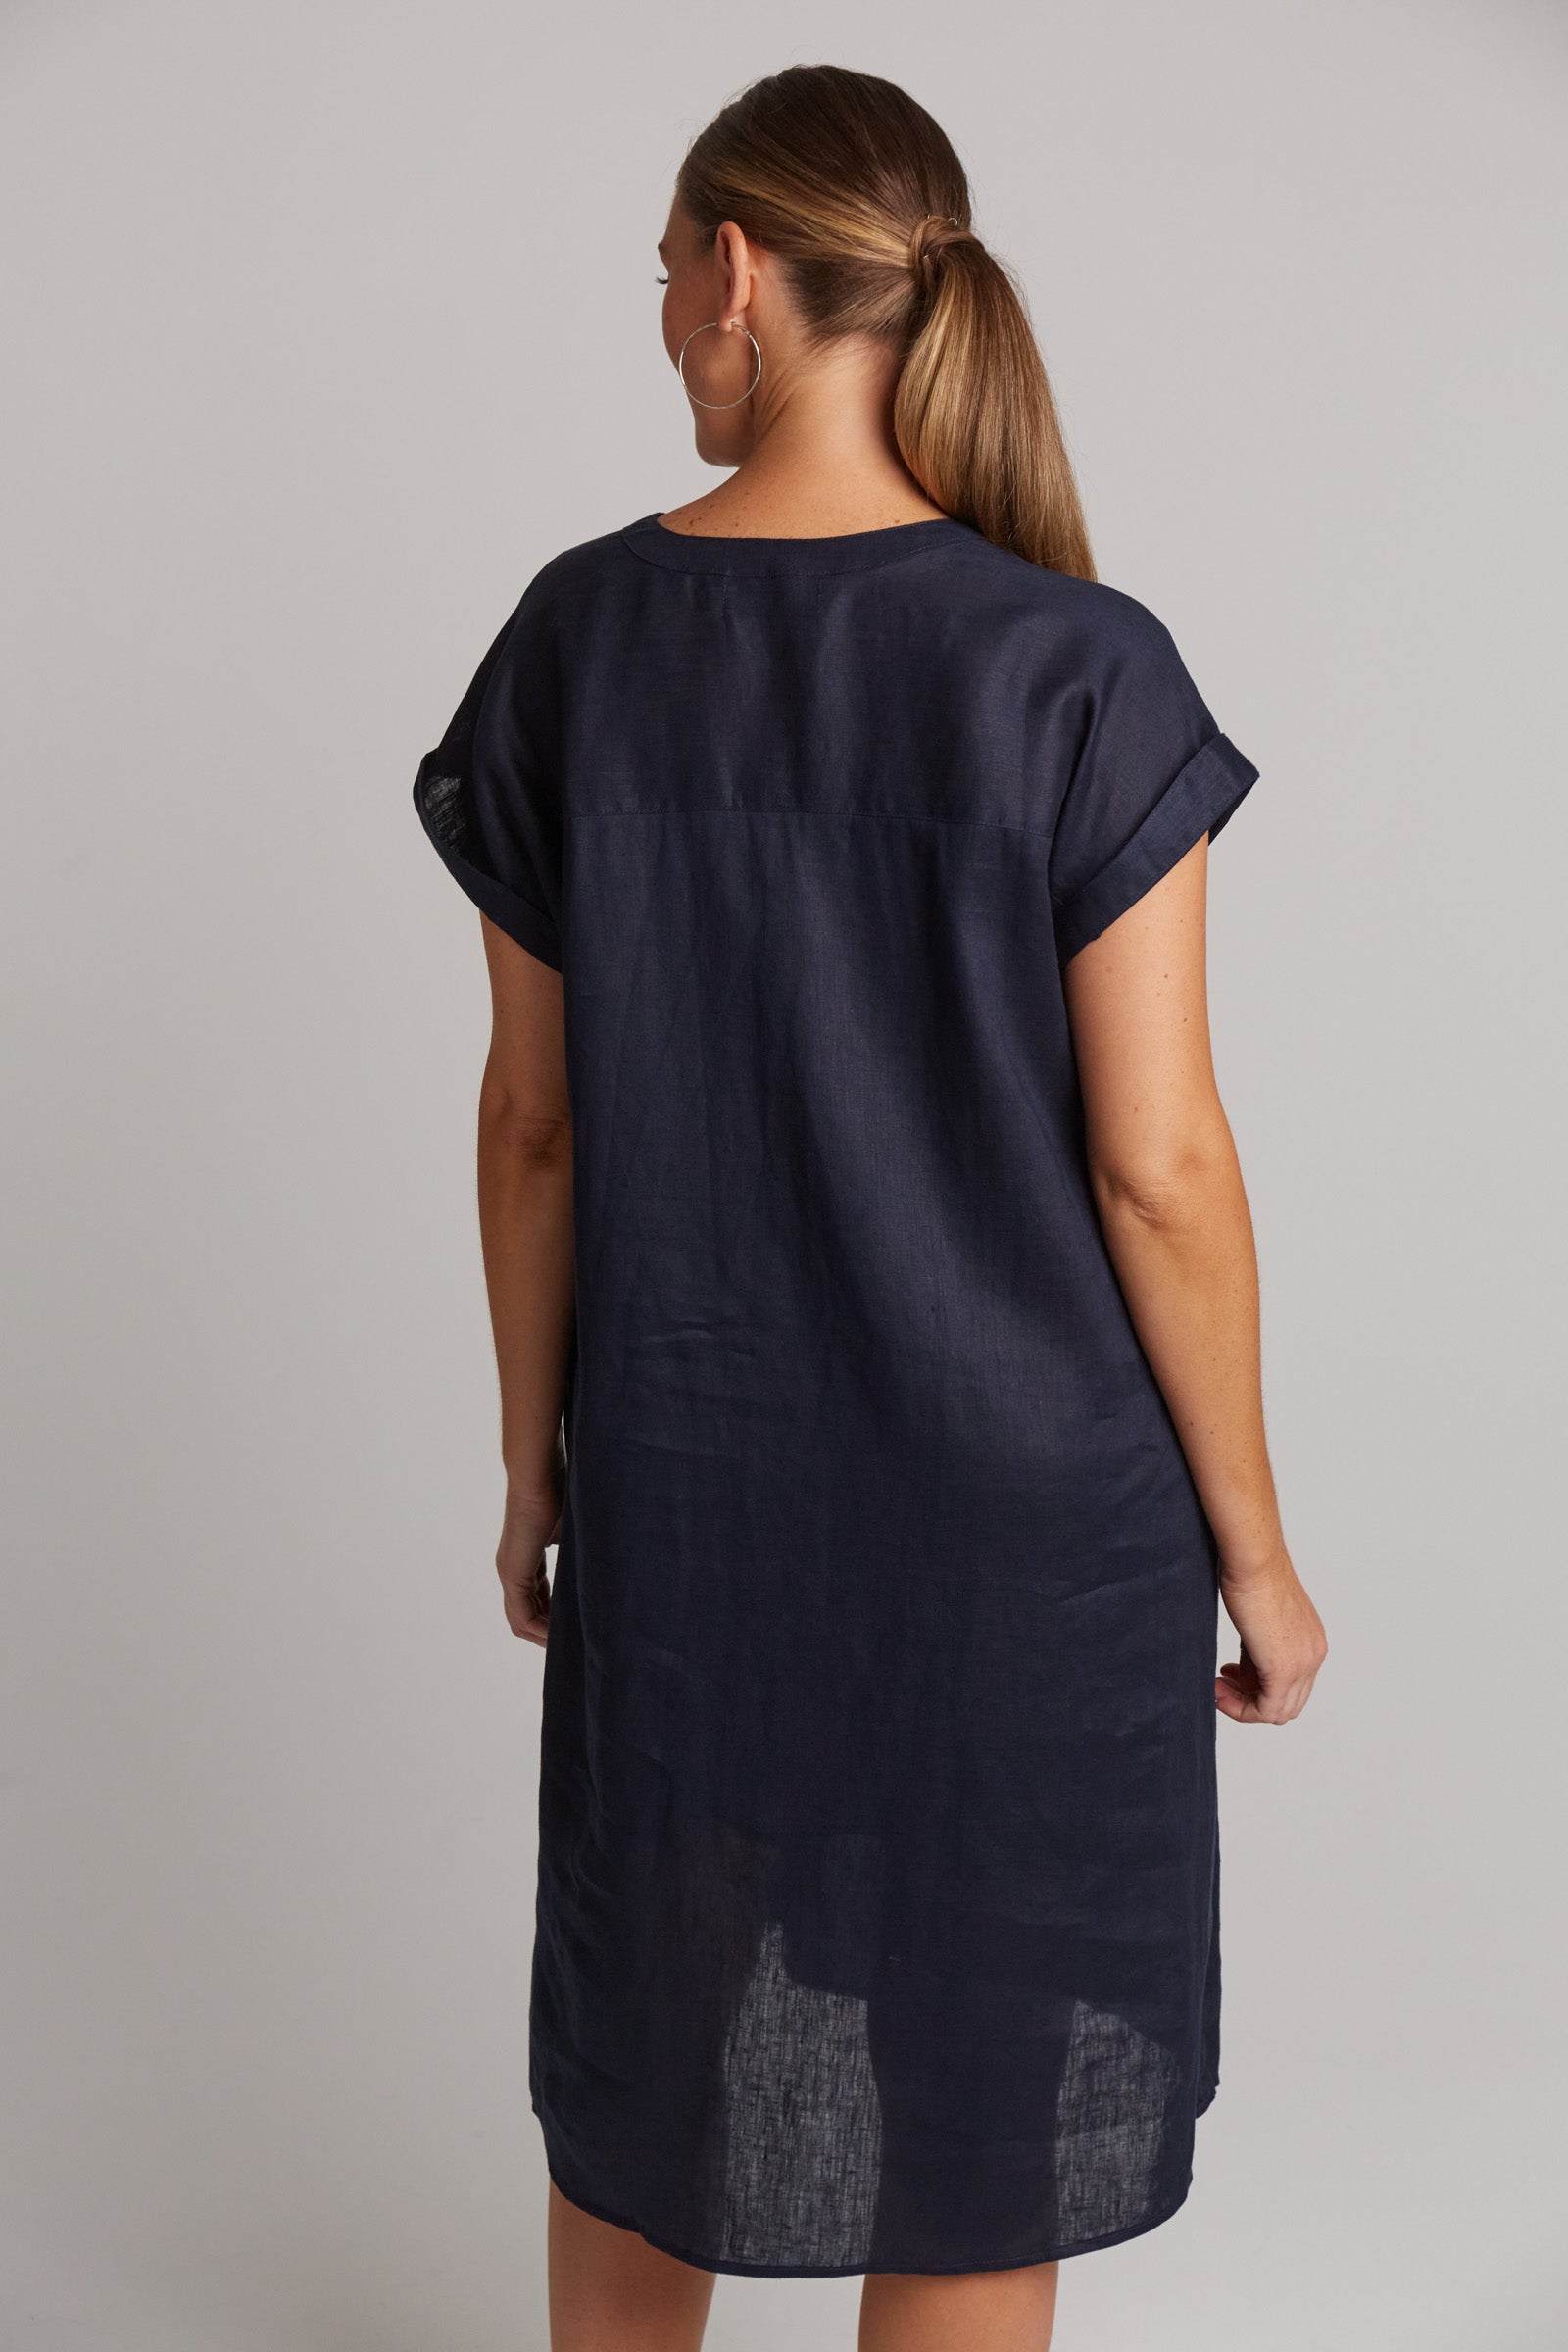 Studio Dress - Navy - eb&ive Clothing - Dress Mid Linen